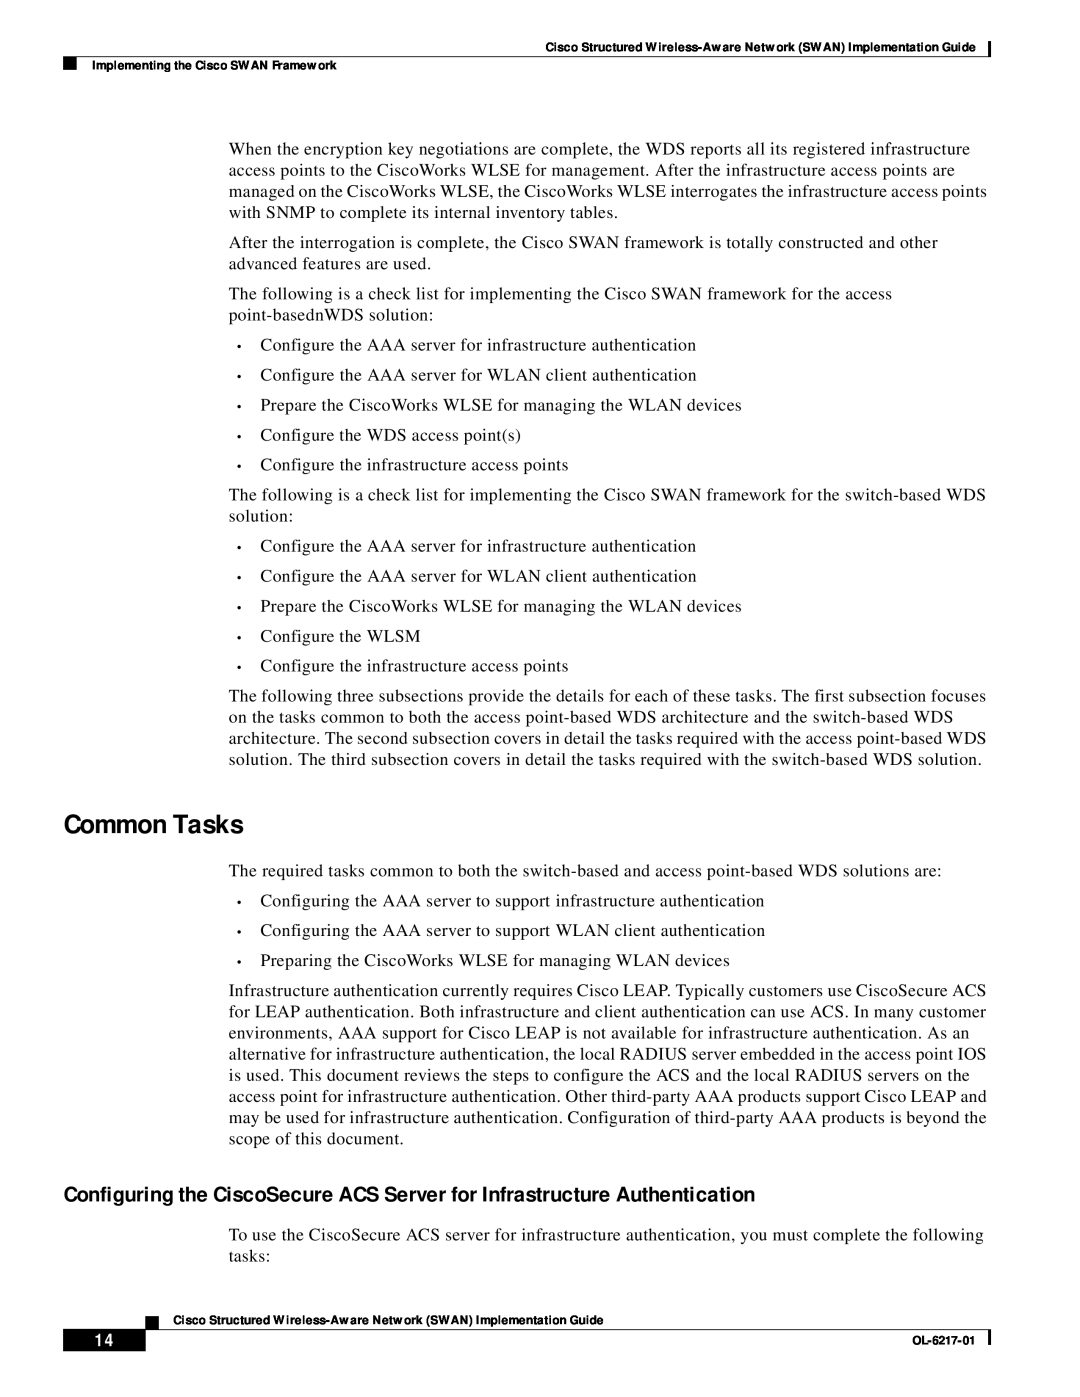 Cisco Systems OL-6217-01 manual Common Tasks 